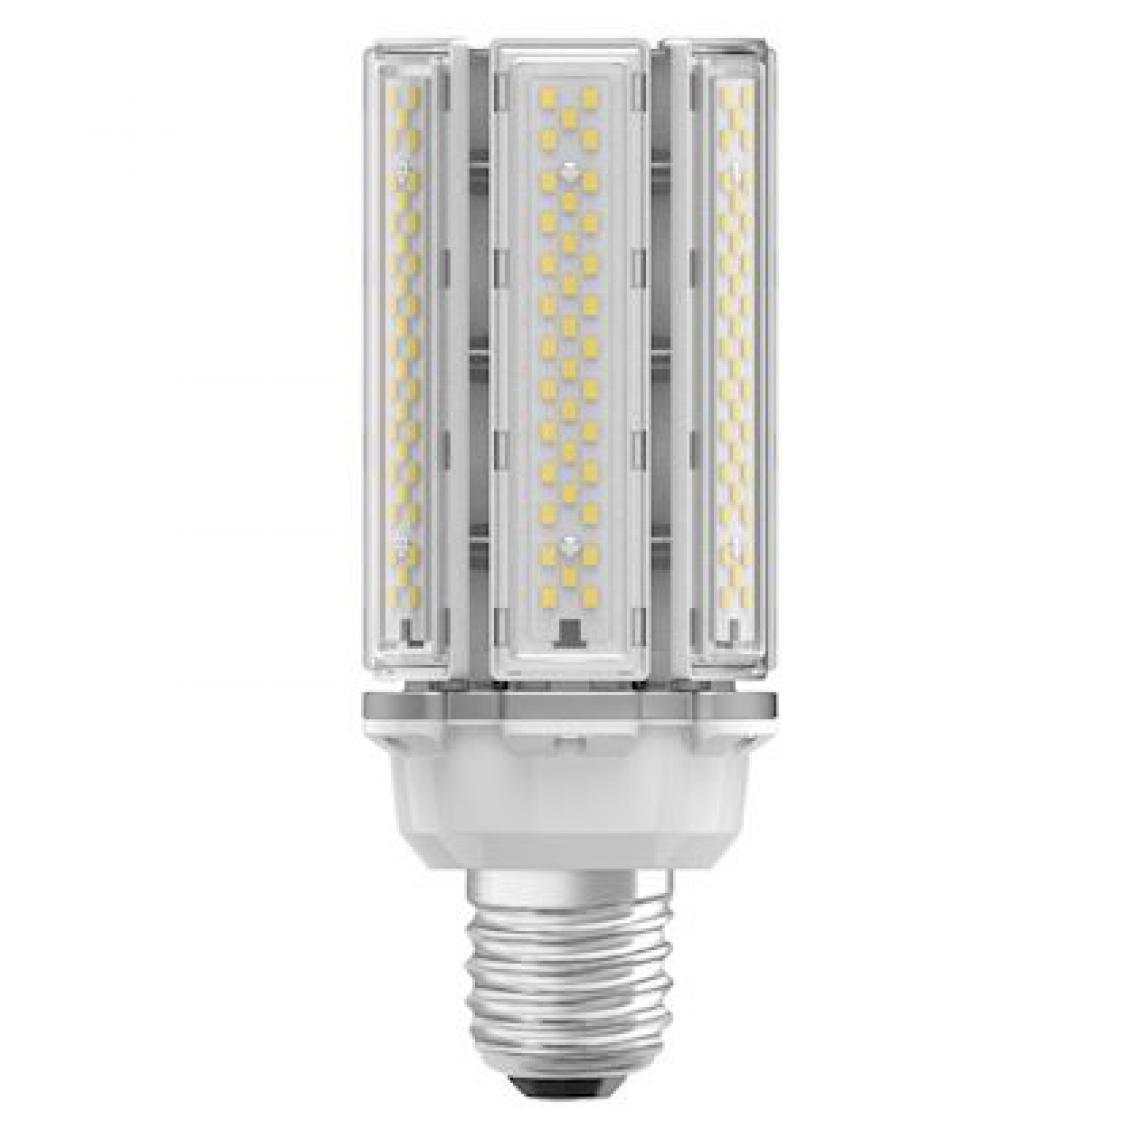 Osram - ampoule à led - osram hql led - pro 125 - e40 - 46w - 2700k - 5400 lm - ip65 - osram 124967 - Ampoules LED